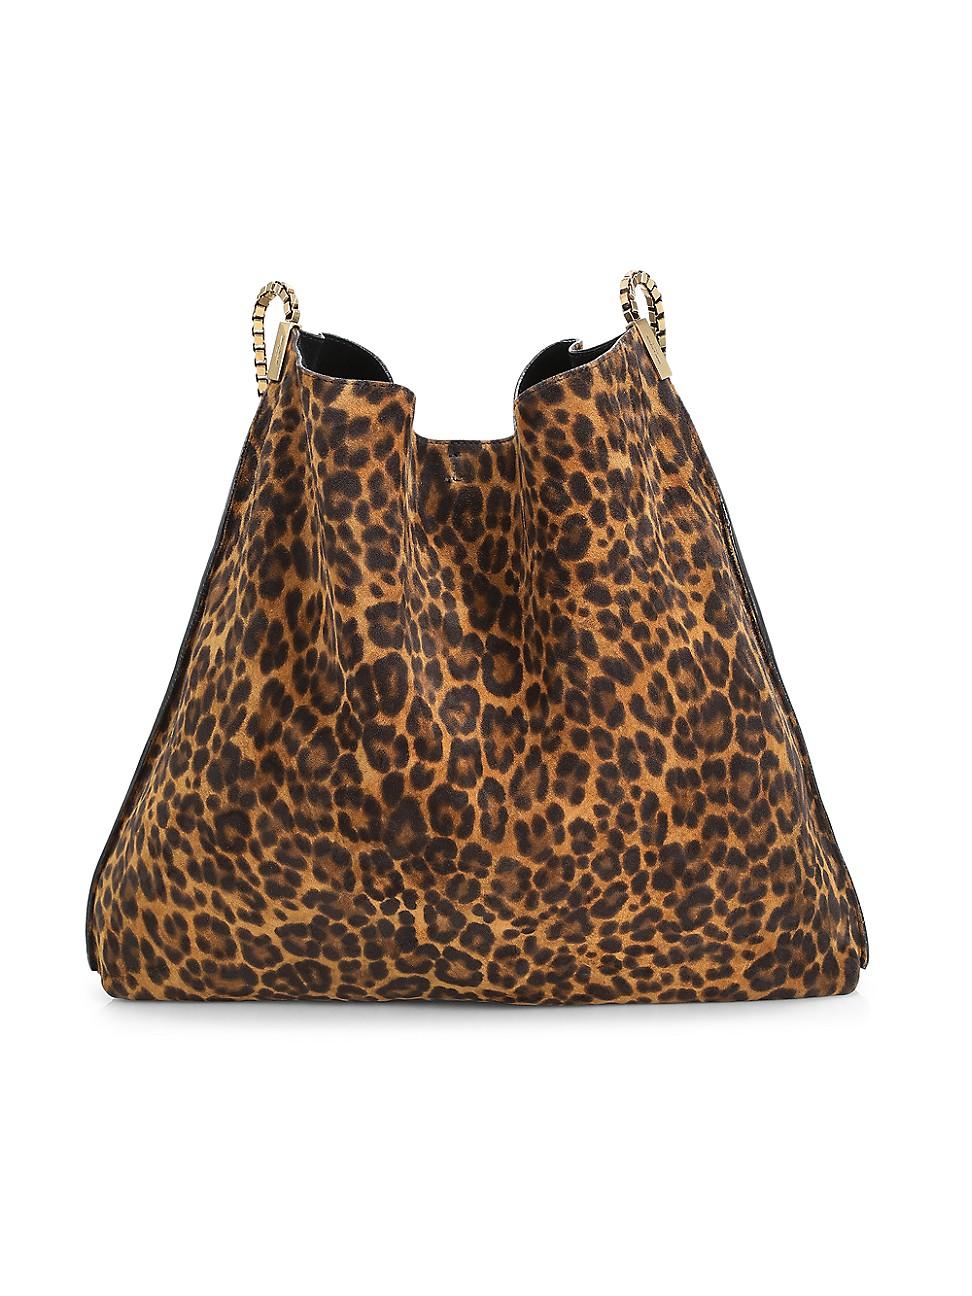 Saint Laurent Chain Strap Leopard-print Hobo Bag in Natural | Lyst